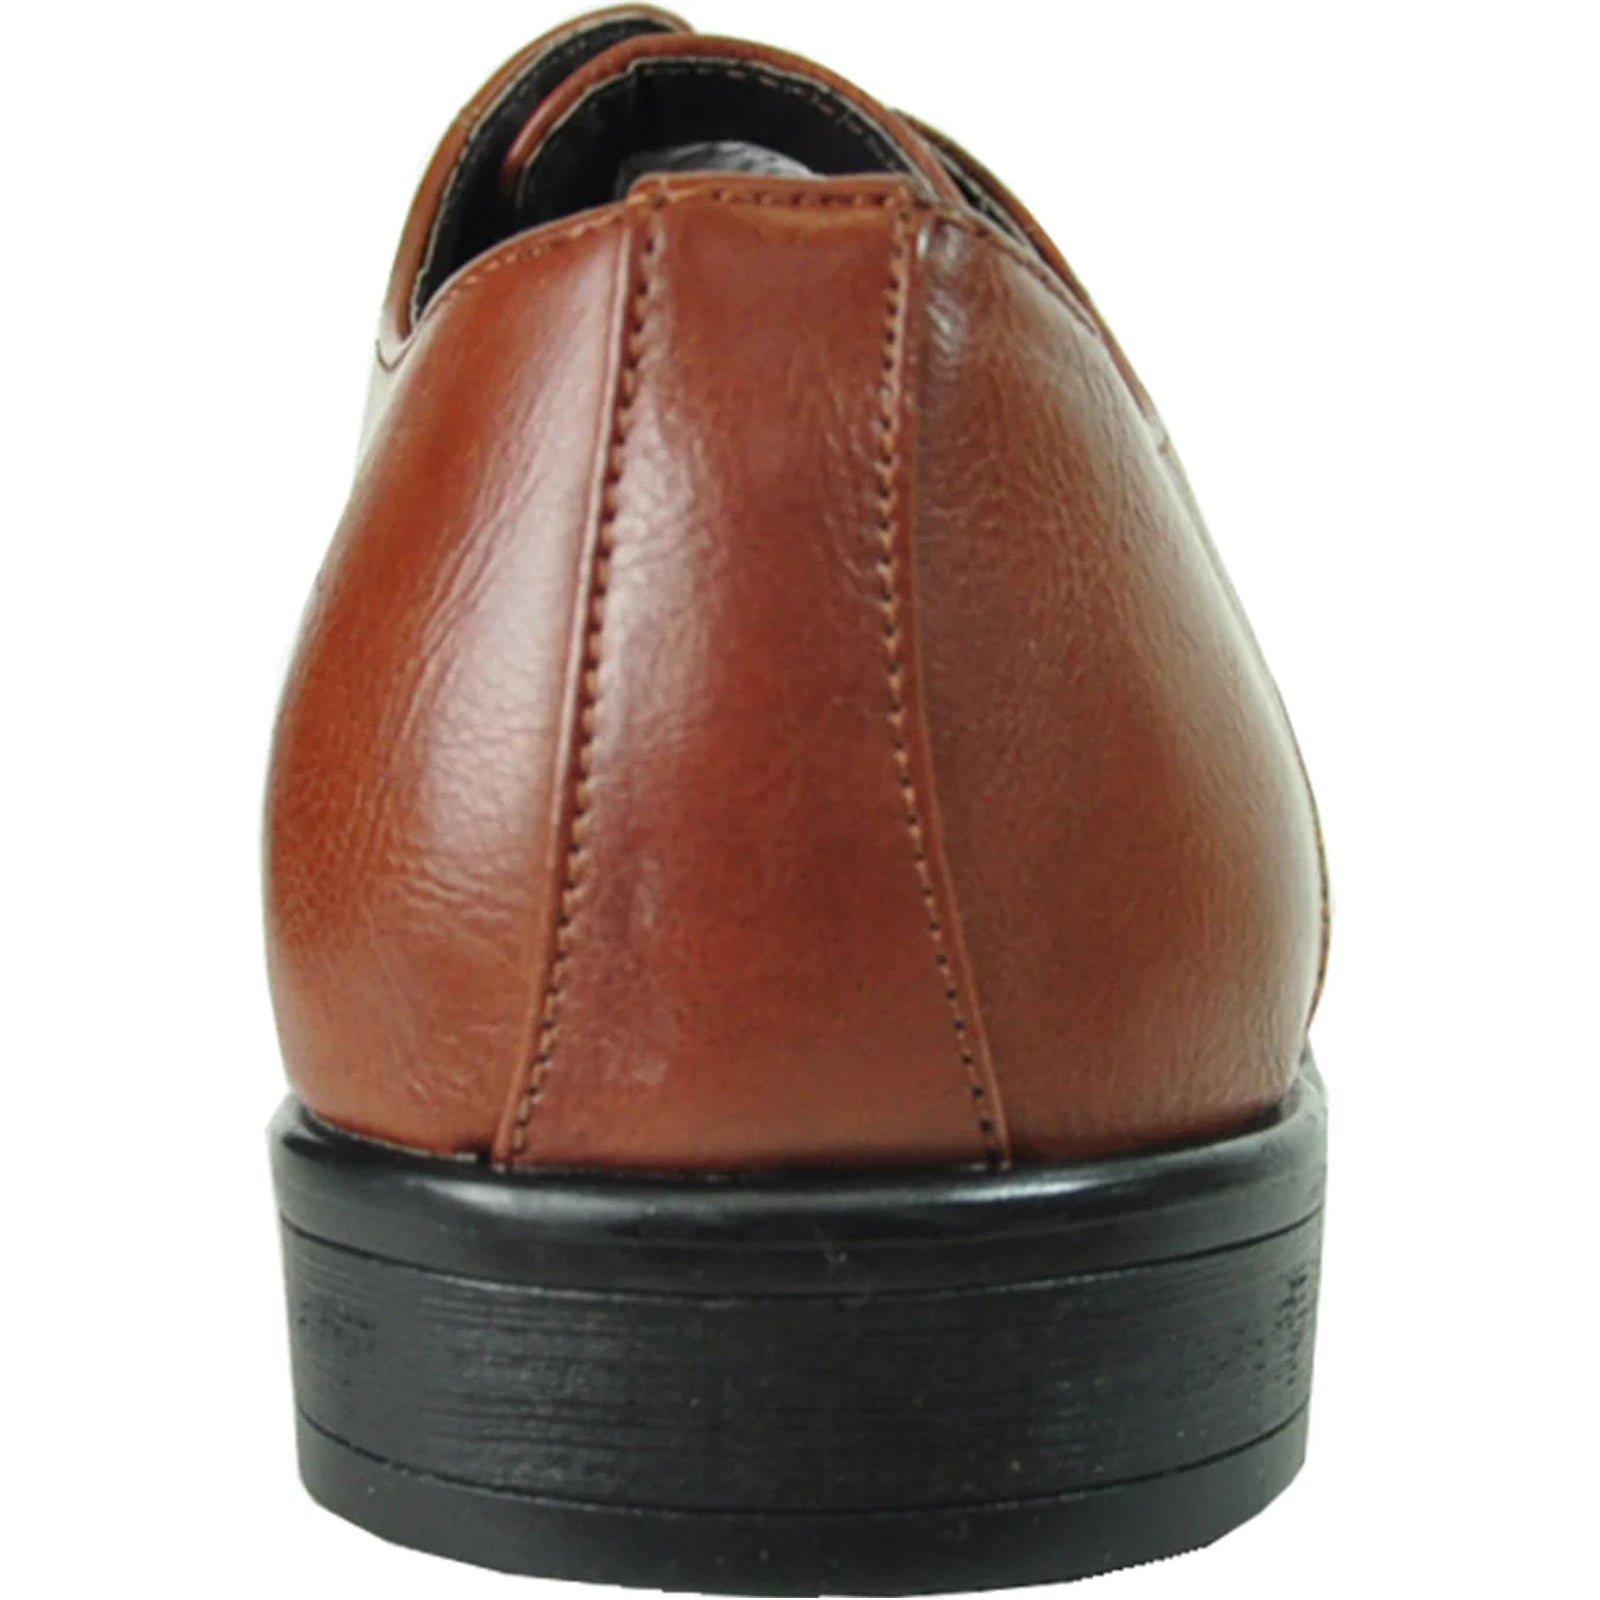 "Brown Oxford Dress Shoe - Men's Pointed Plain Toe Style"